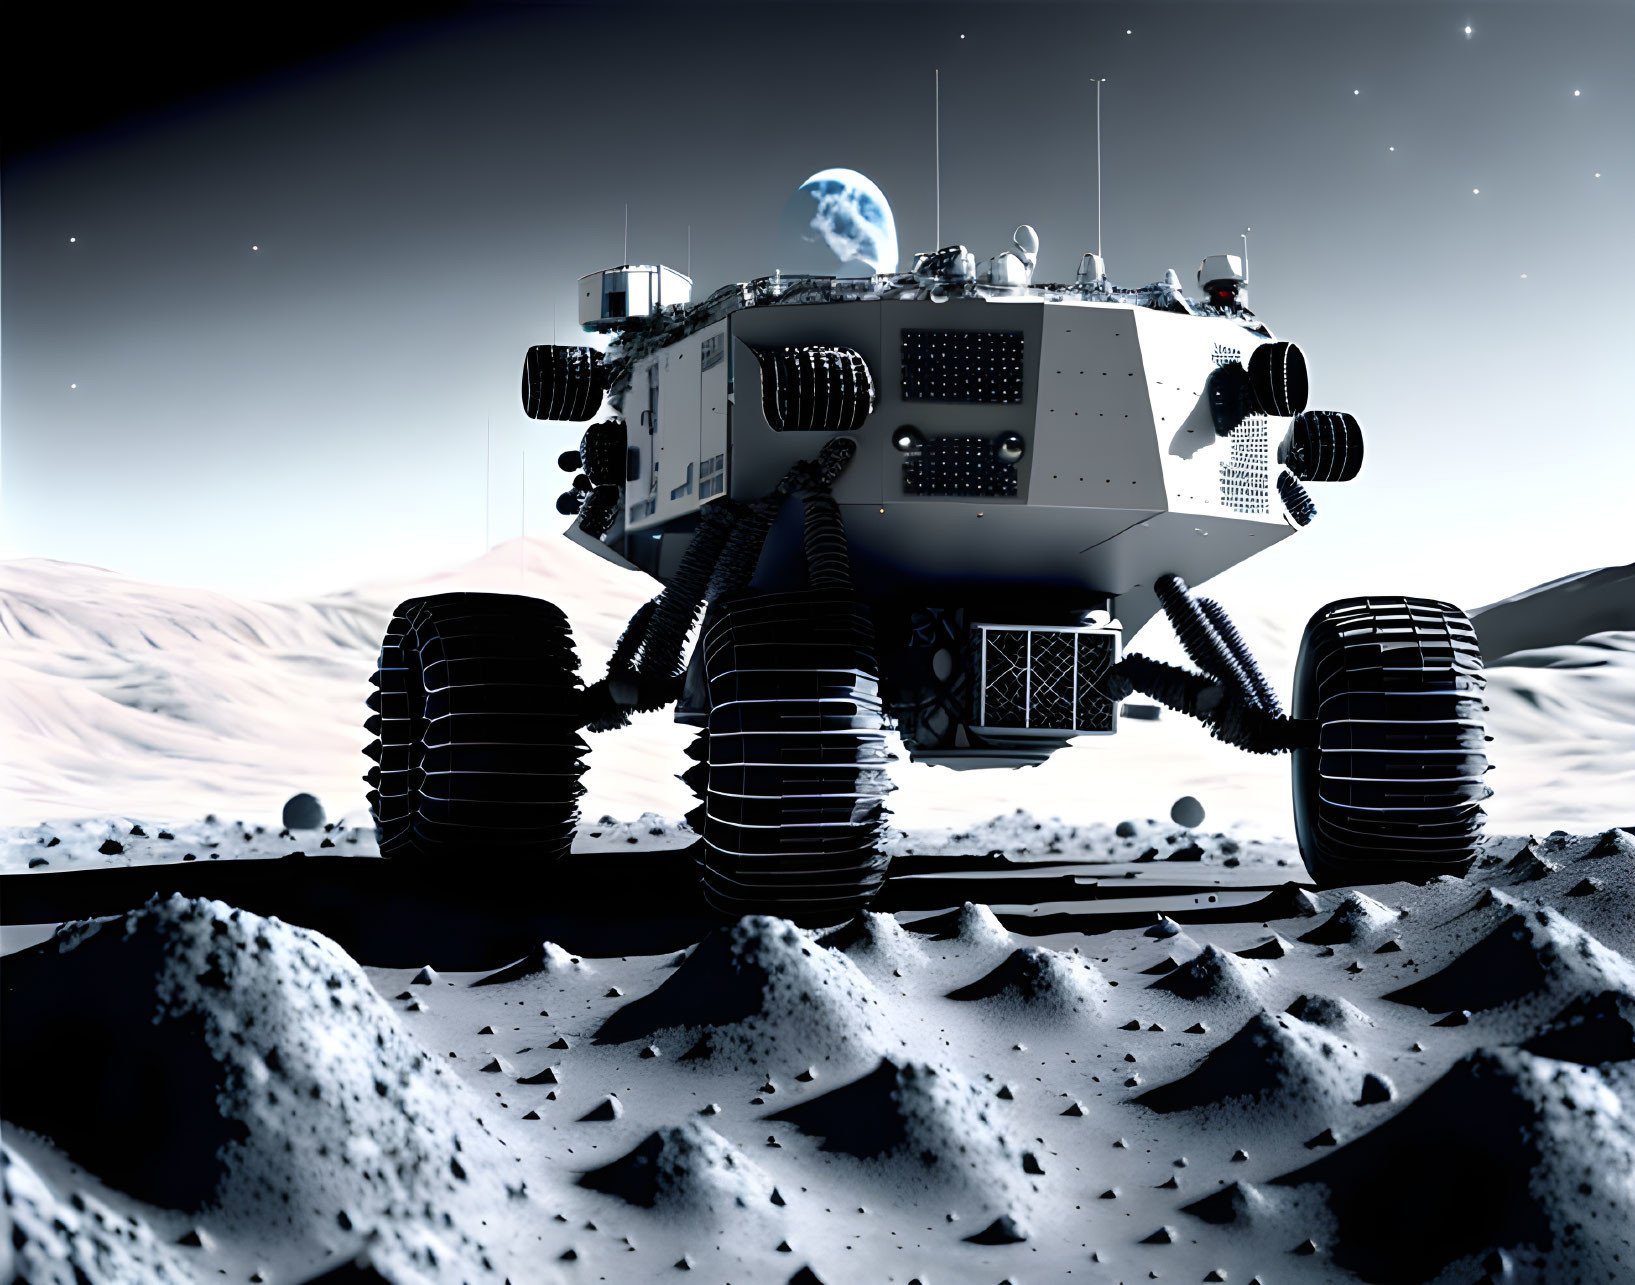 A Lunar Rover